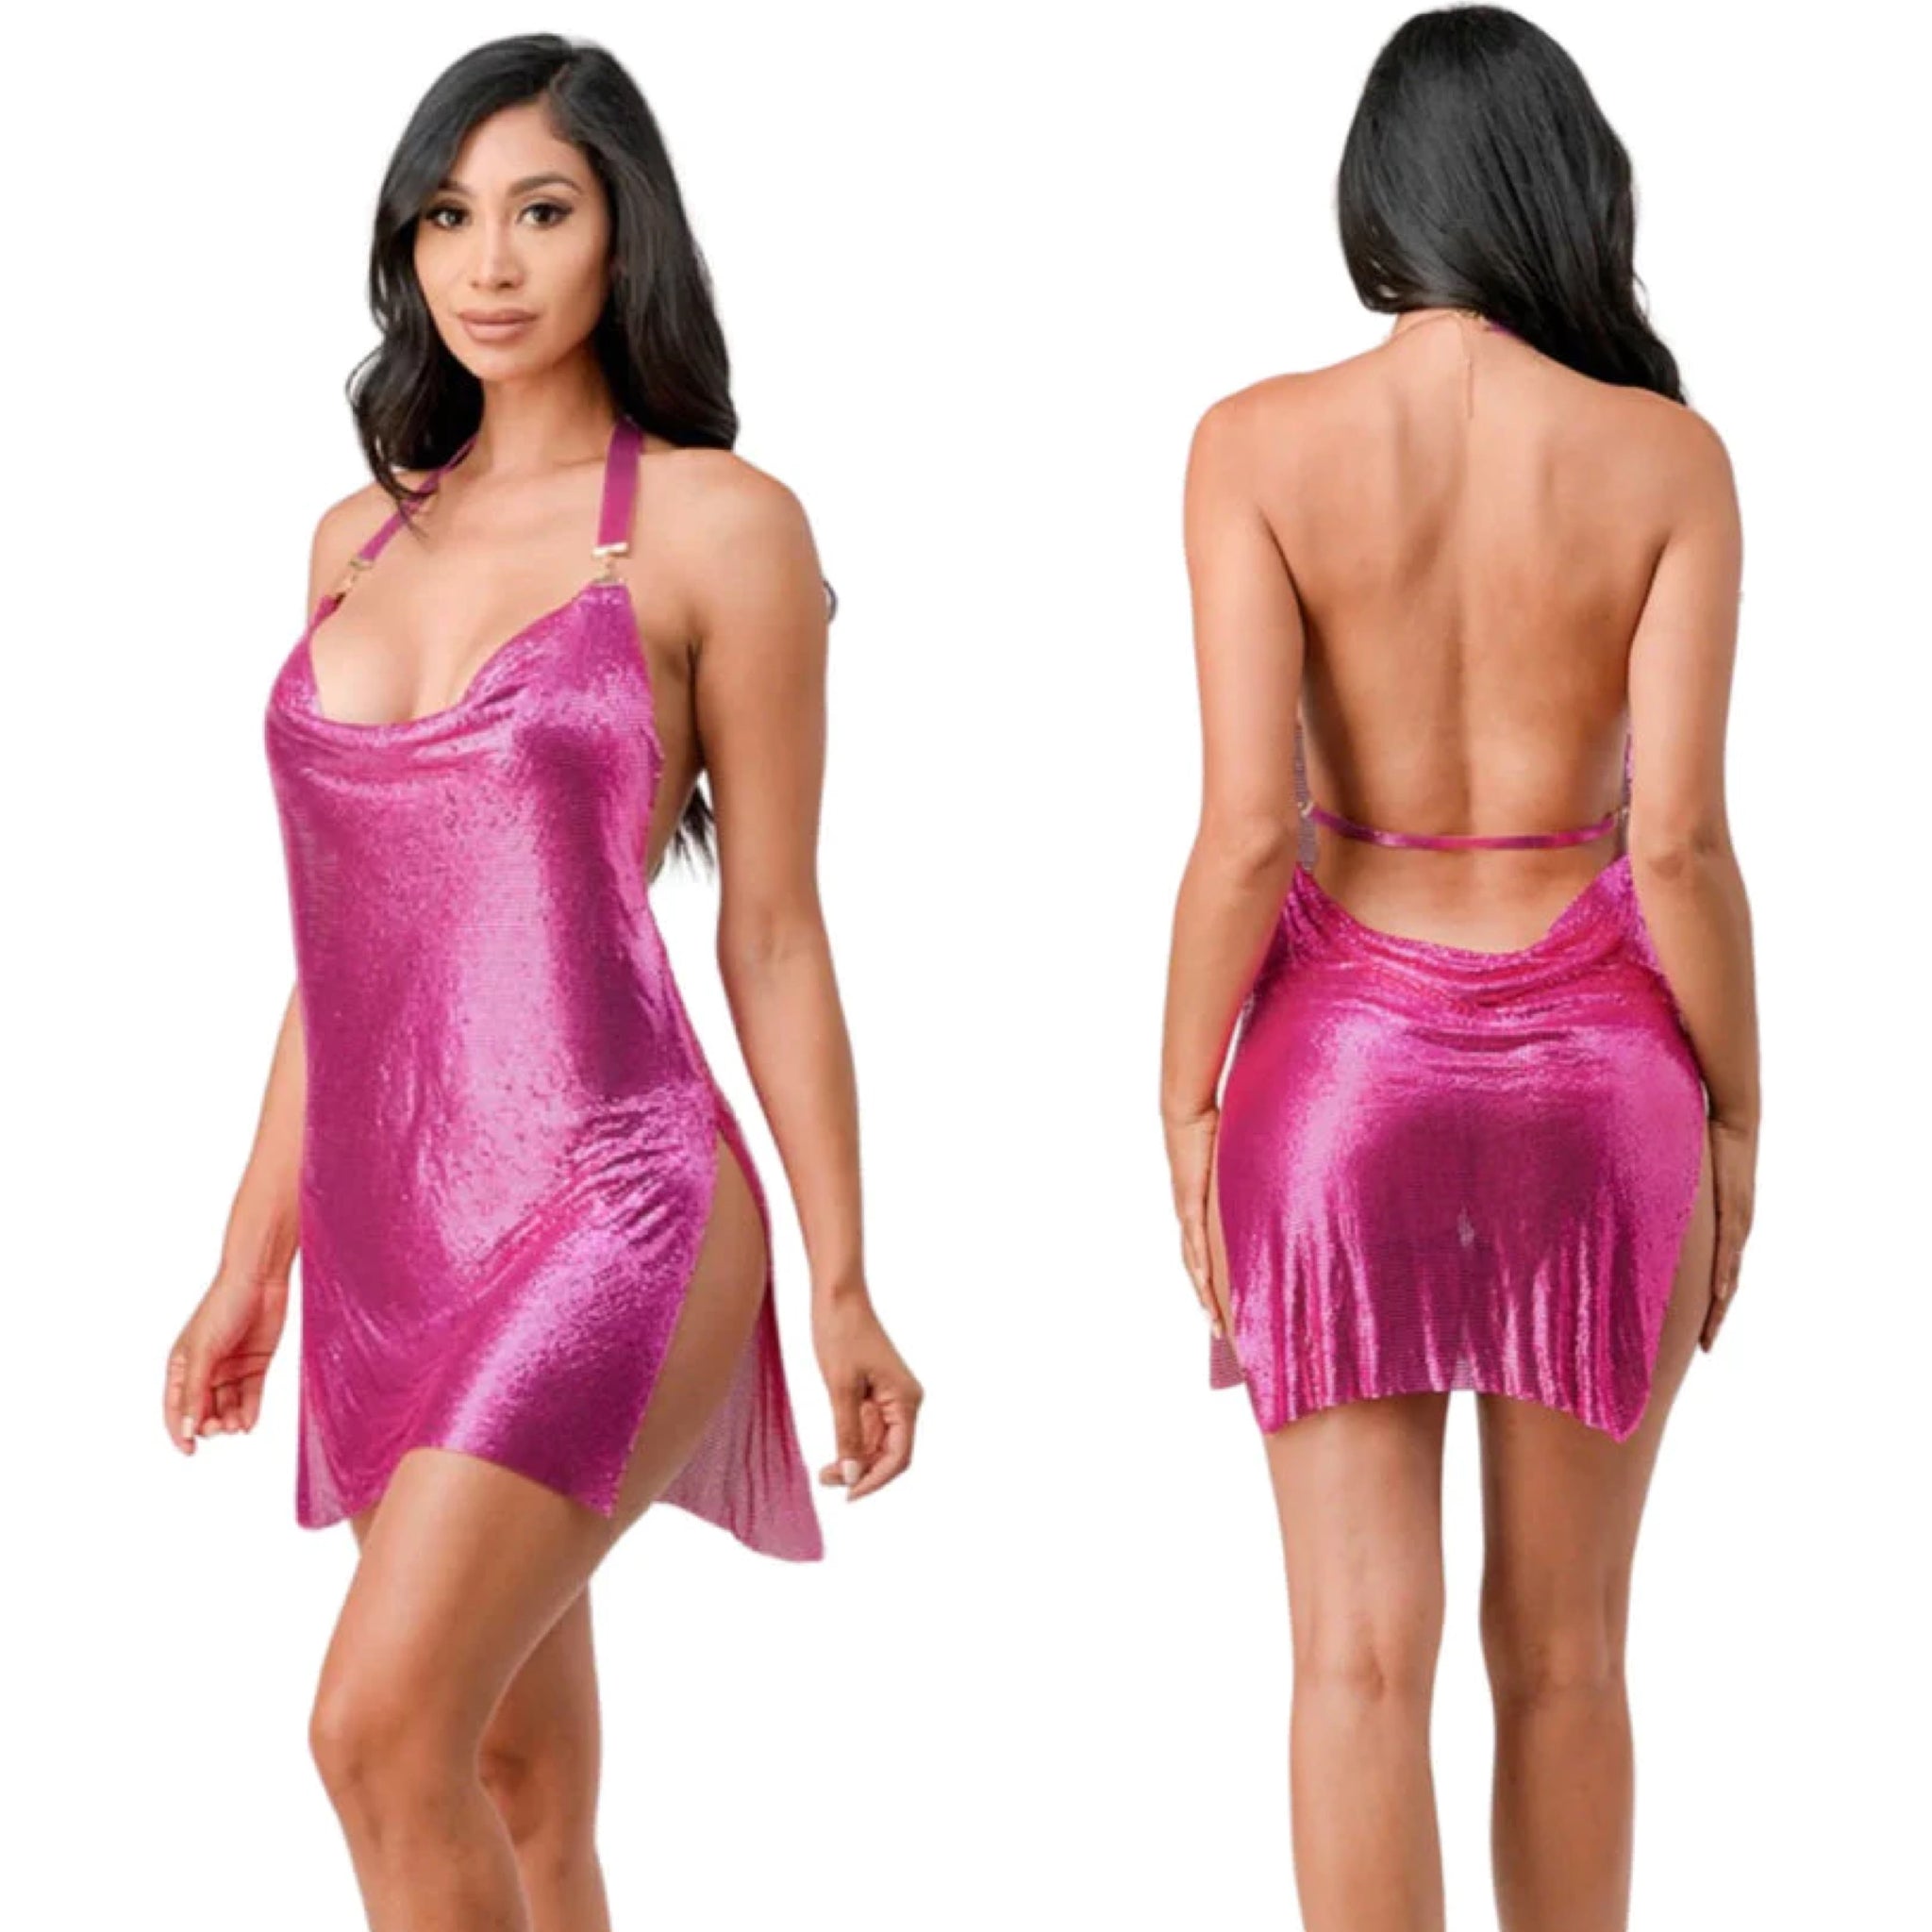 Nala Metallic Dress (Hot Pink)